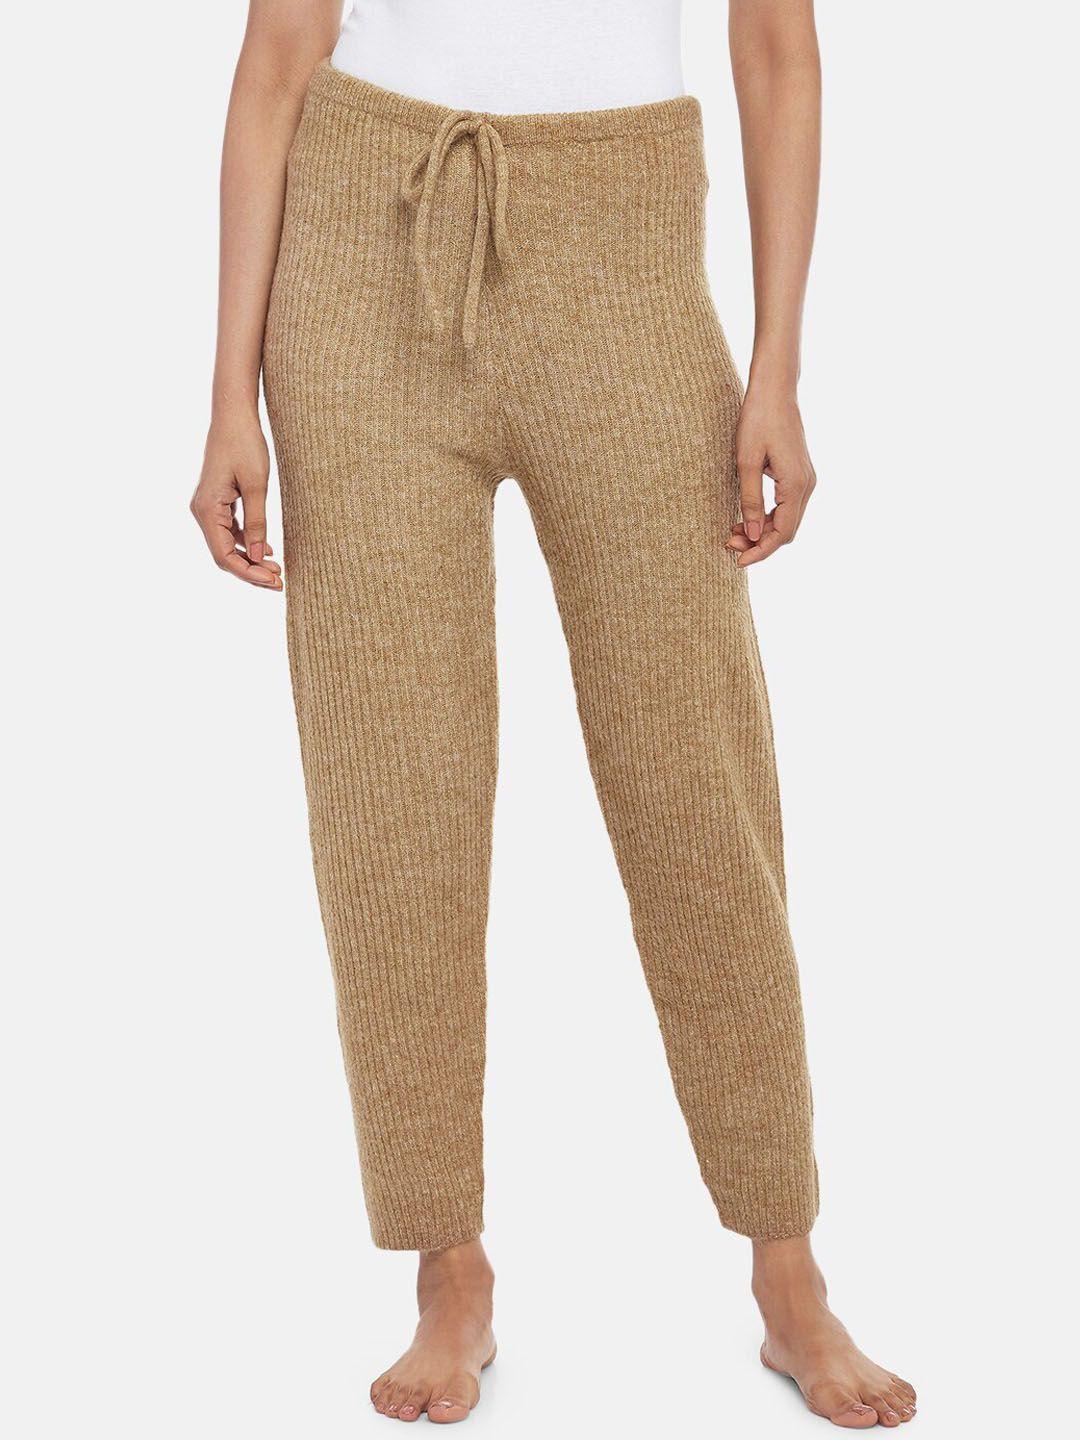 dreamz-by-pantaloons-women-brown-ribbed-pyjamas